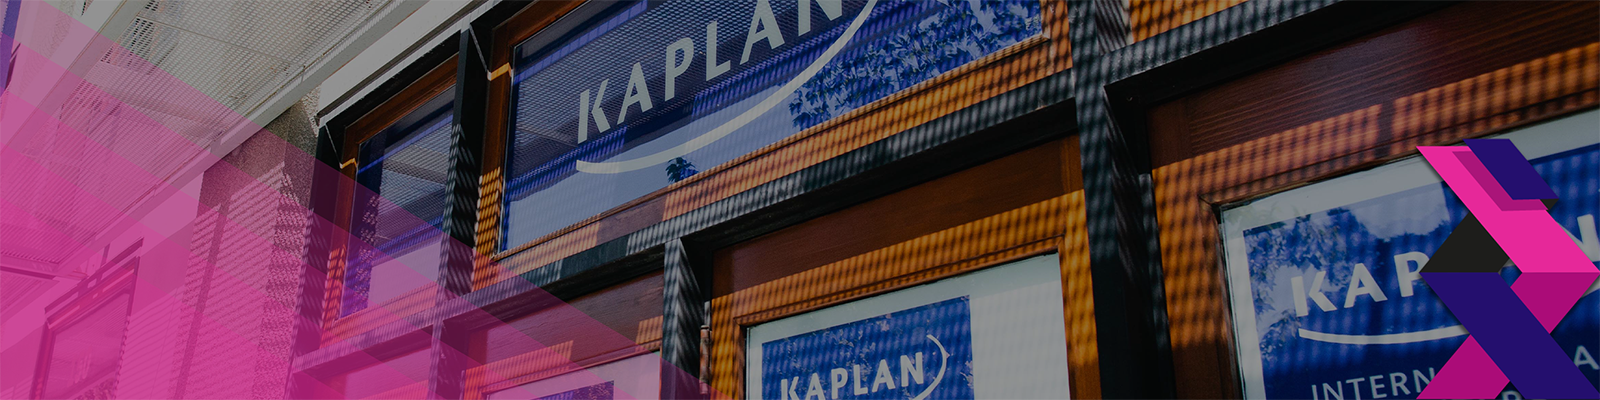 Kaplan International Languages - Bournemouth görseli